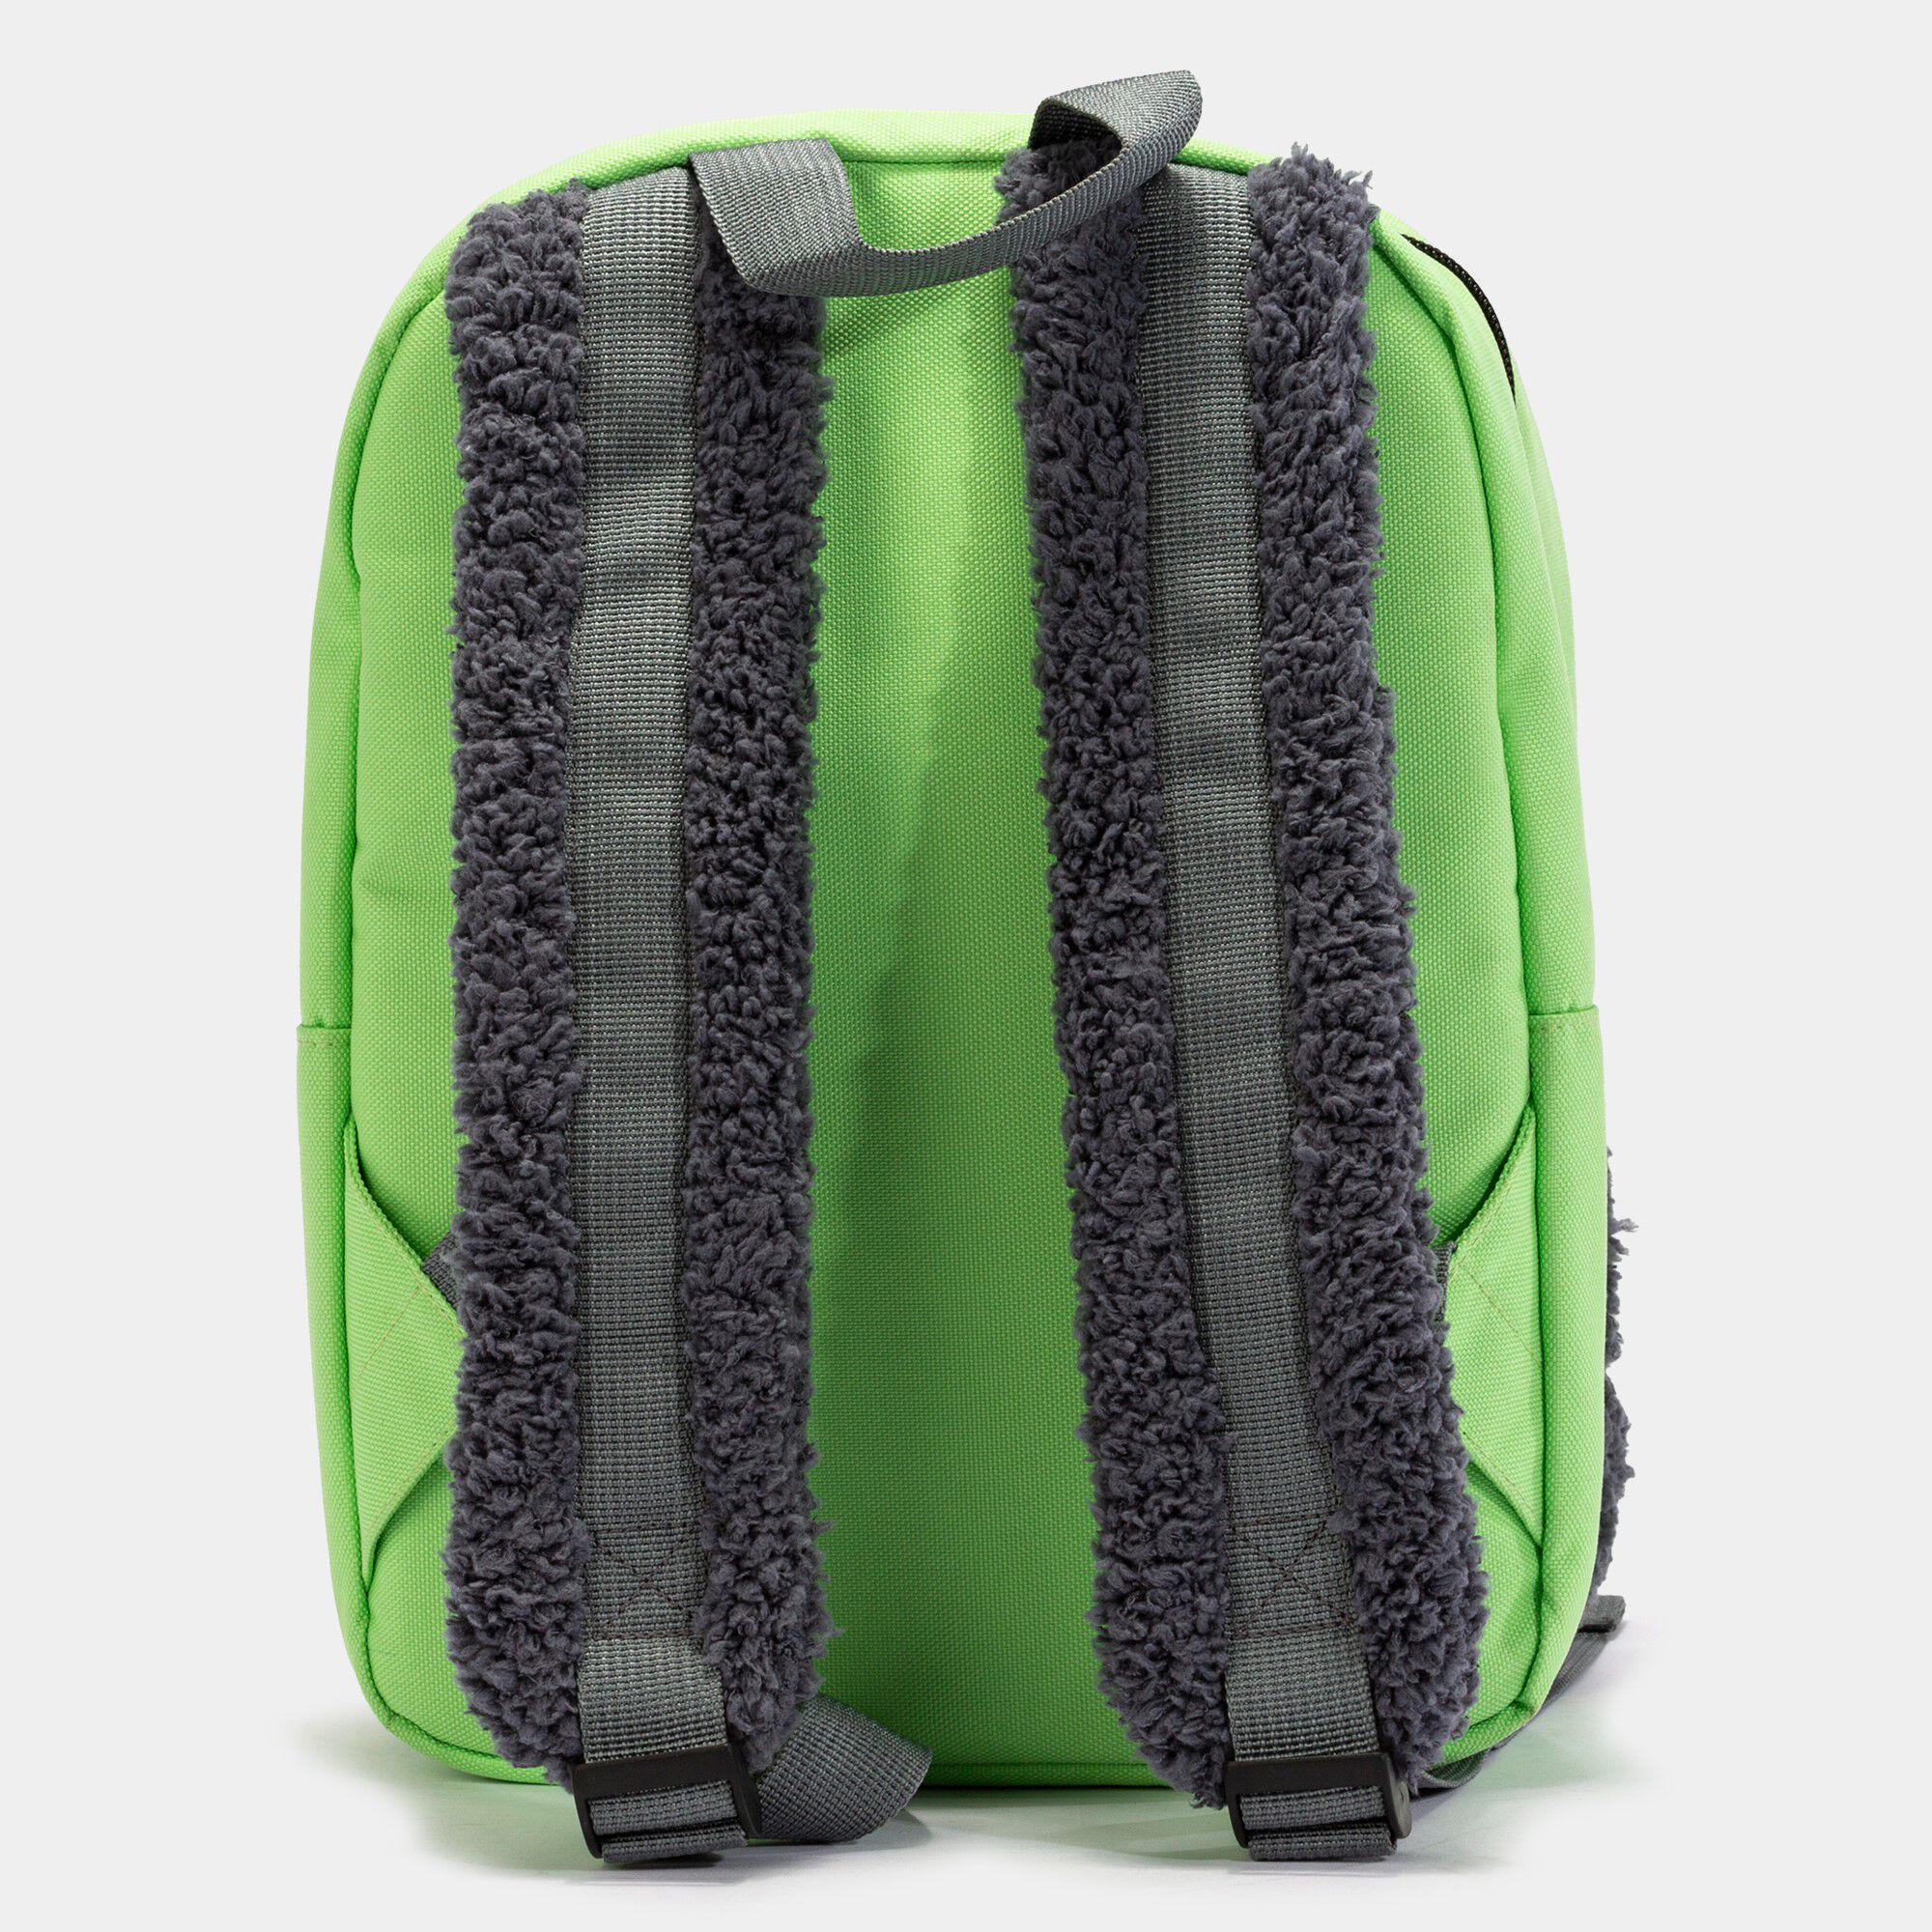 Backpack - shoe bag Friendly green